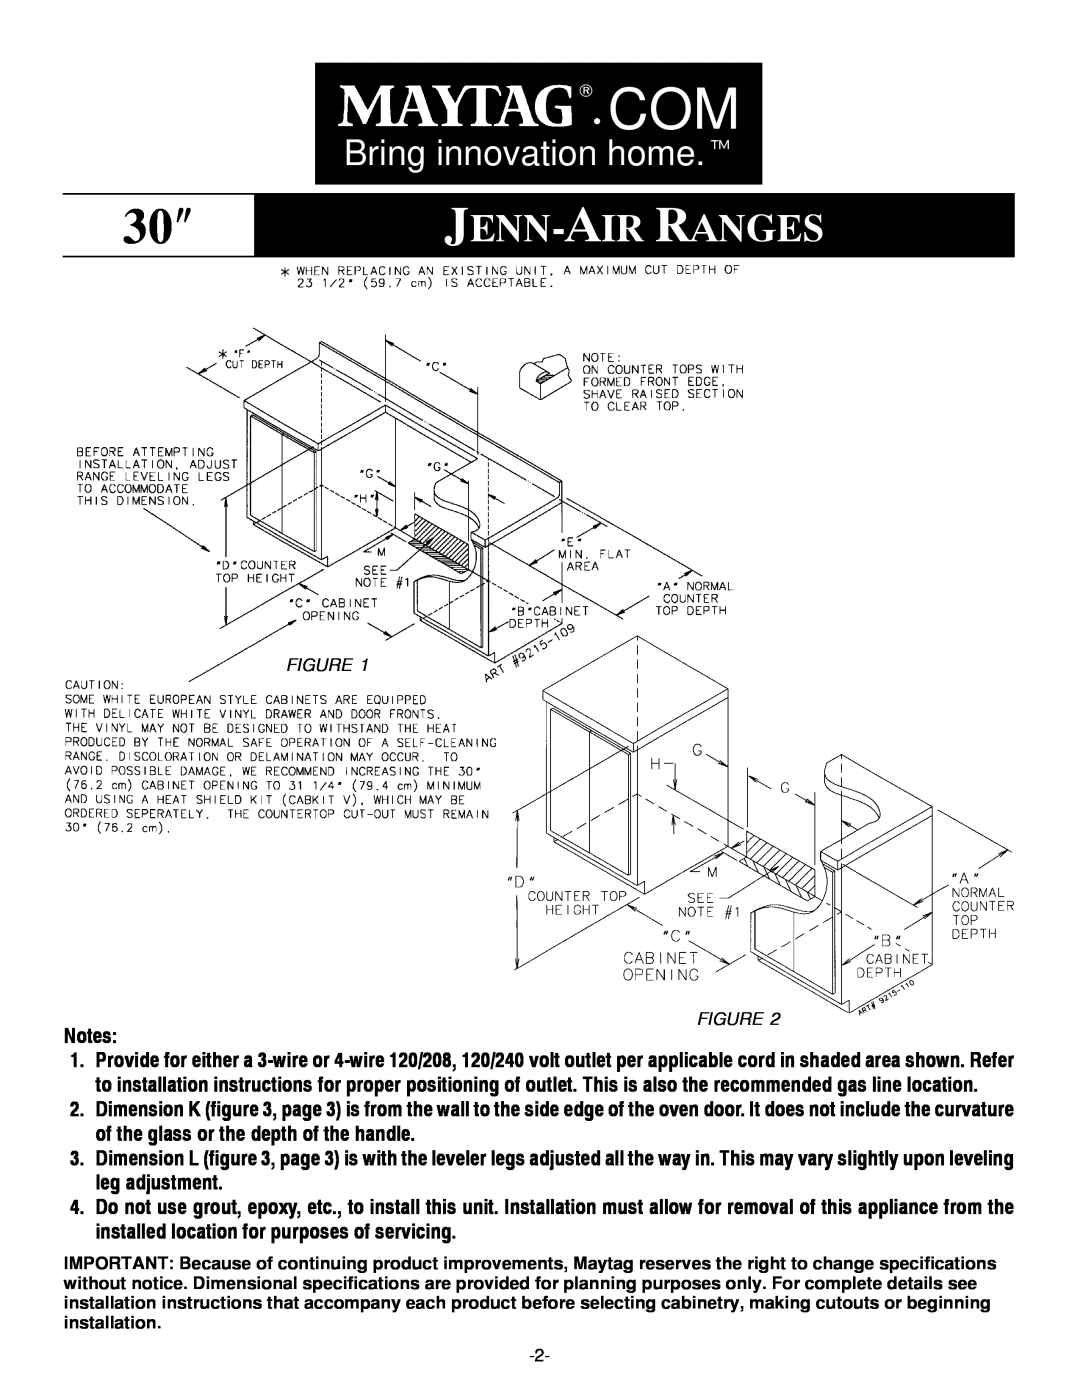 Jenn-Air installation manual Jenn-Air Ranges, Bring innovation home.t 